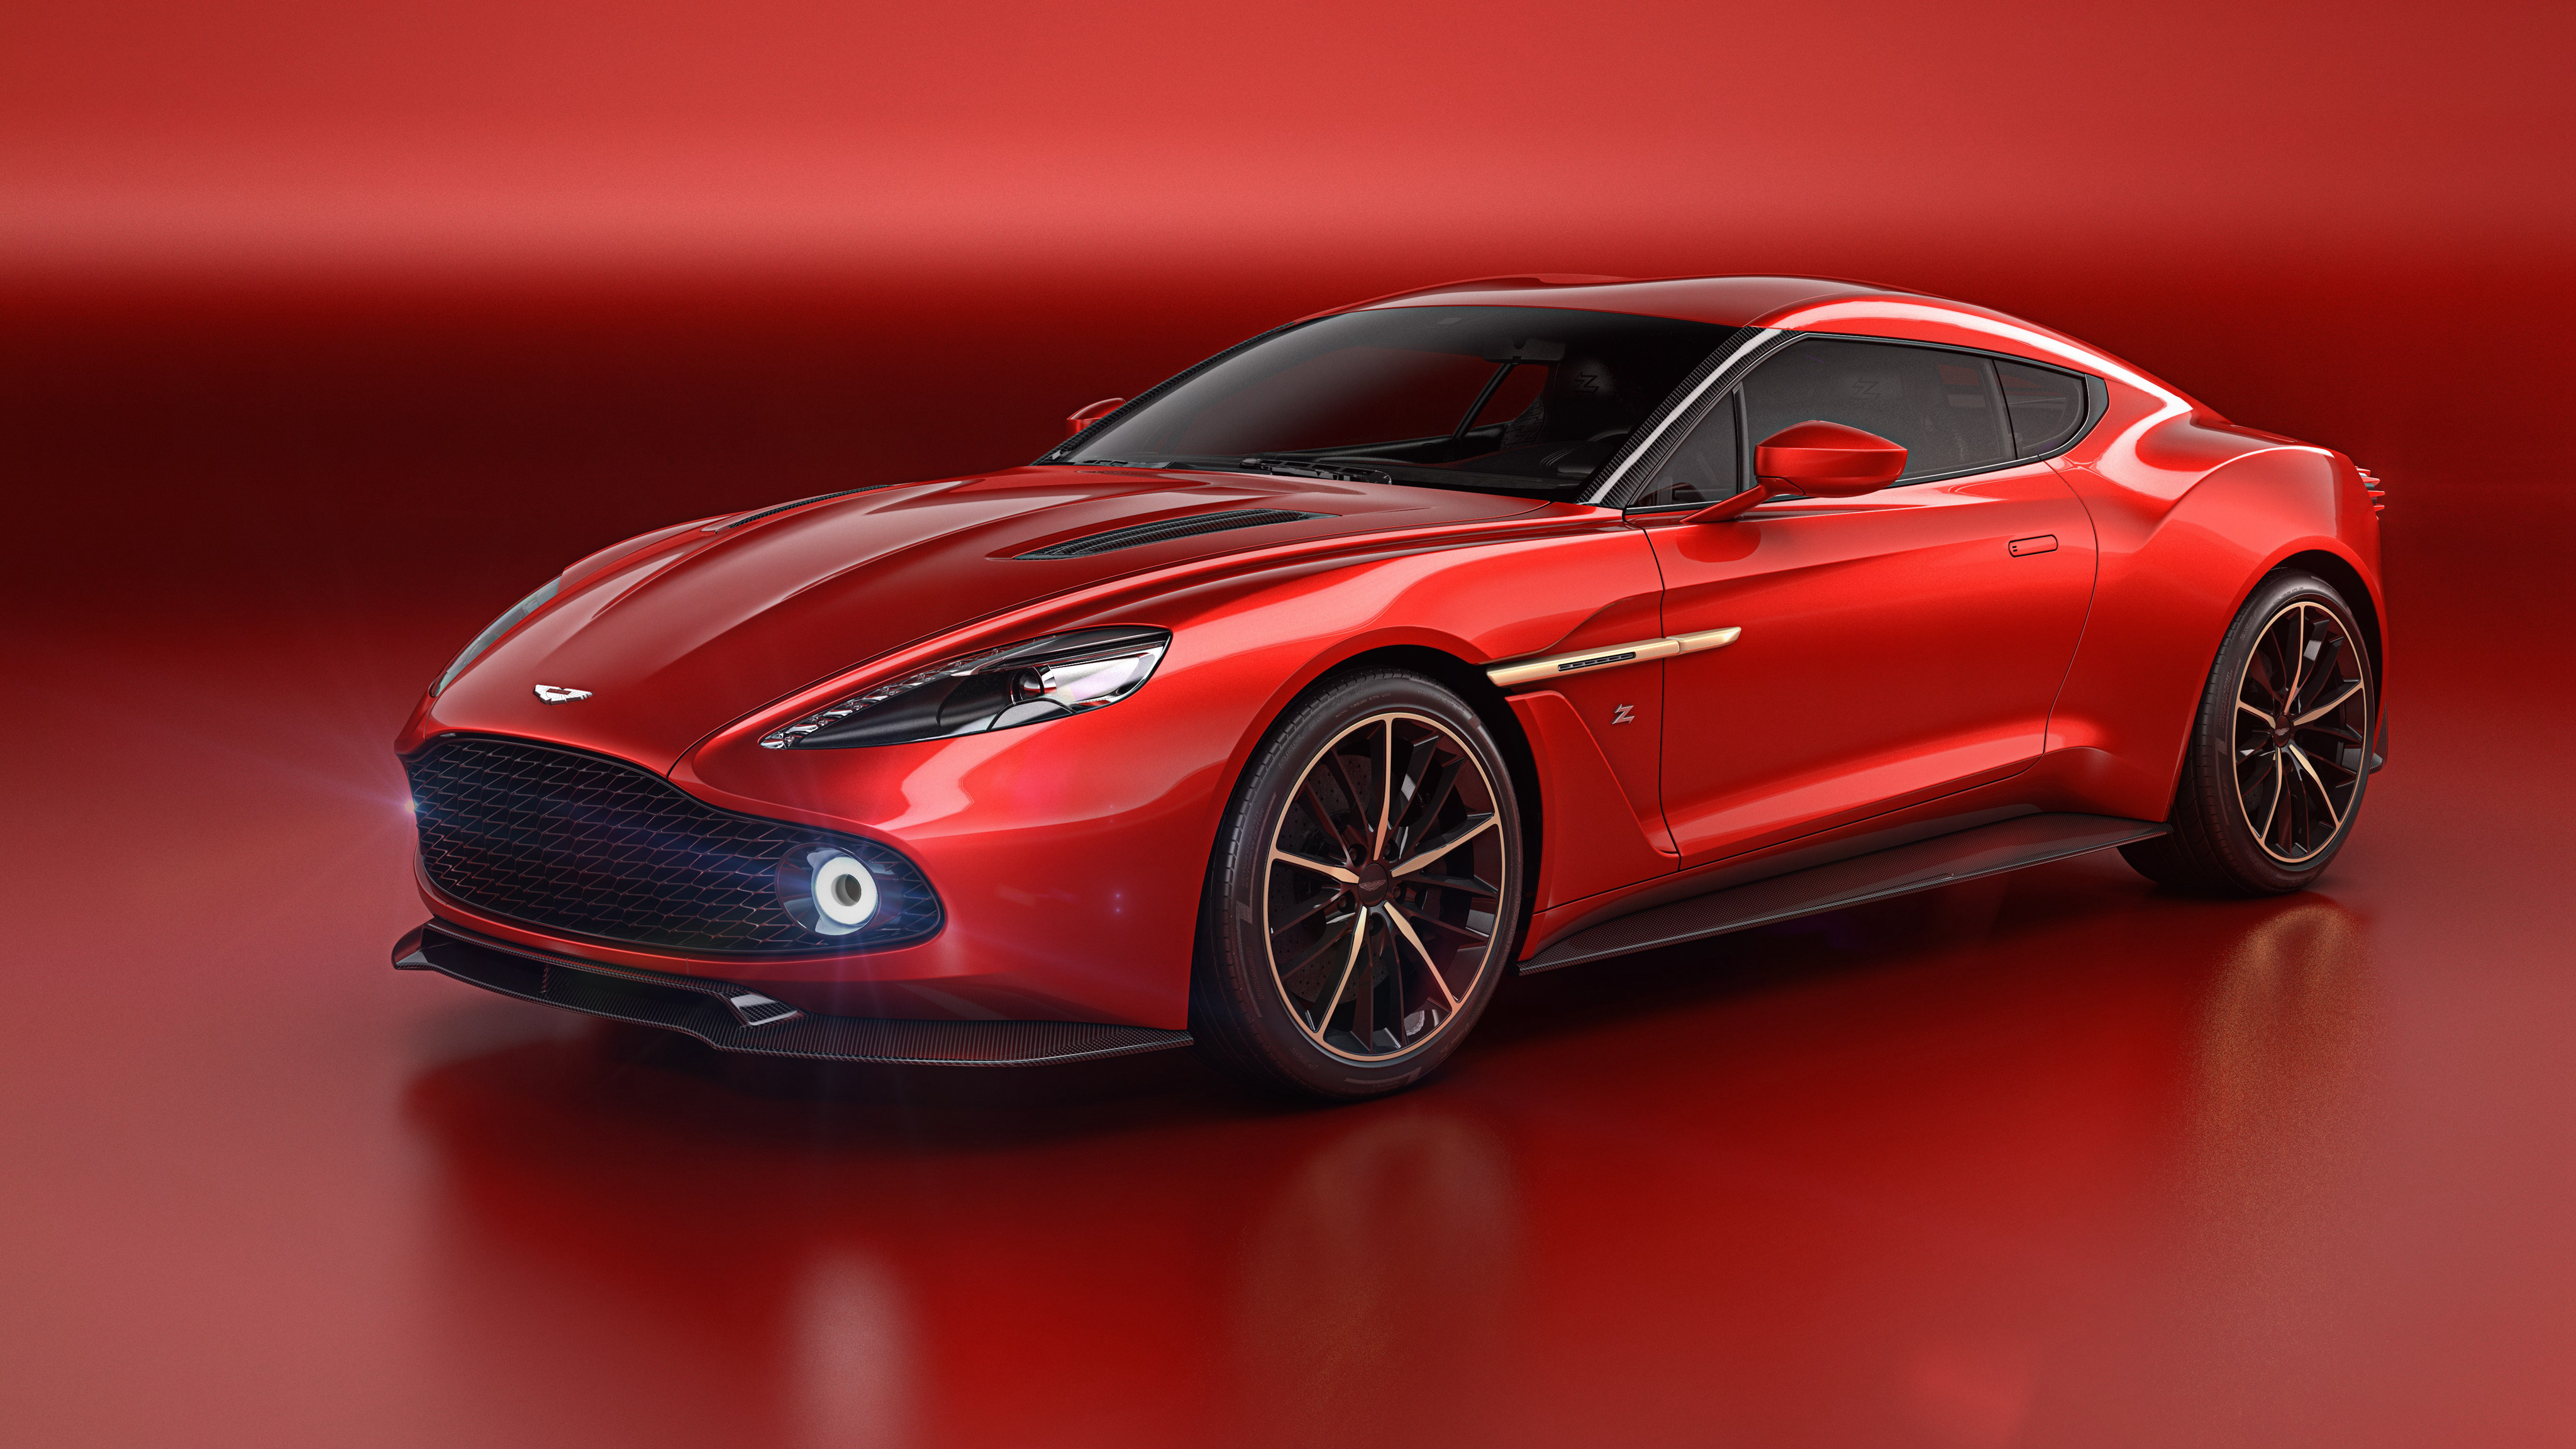 Popular Aston Martin background images